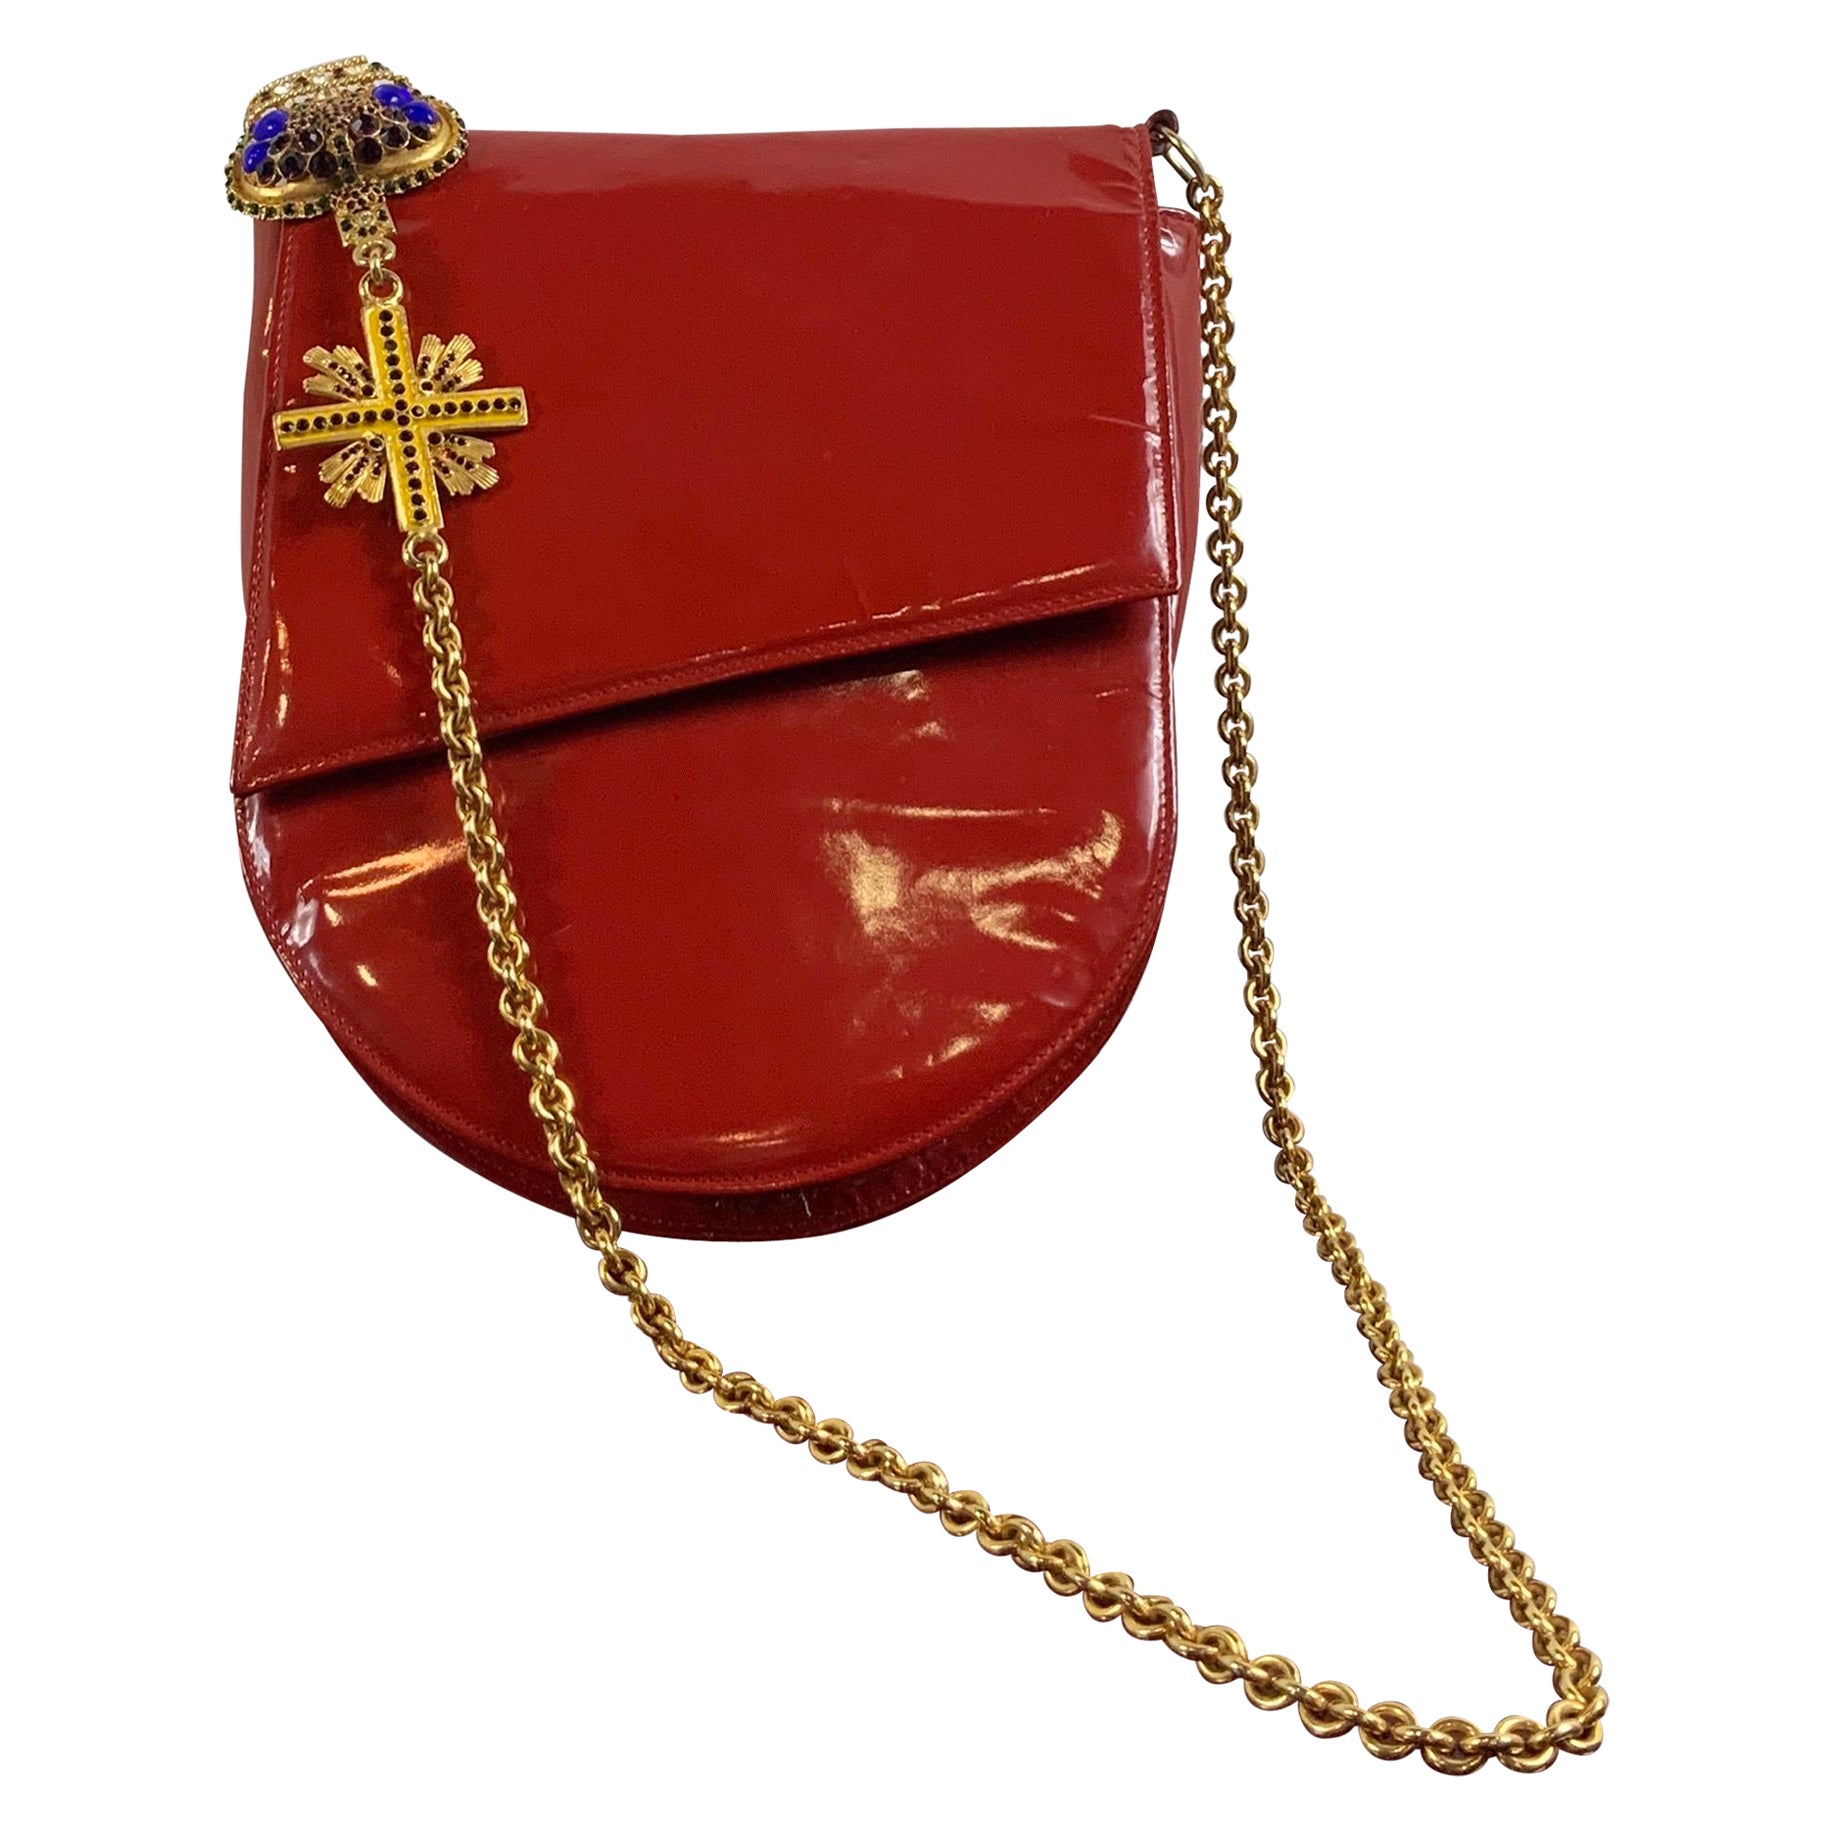 Gianni Versace red leather shoulder bag